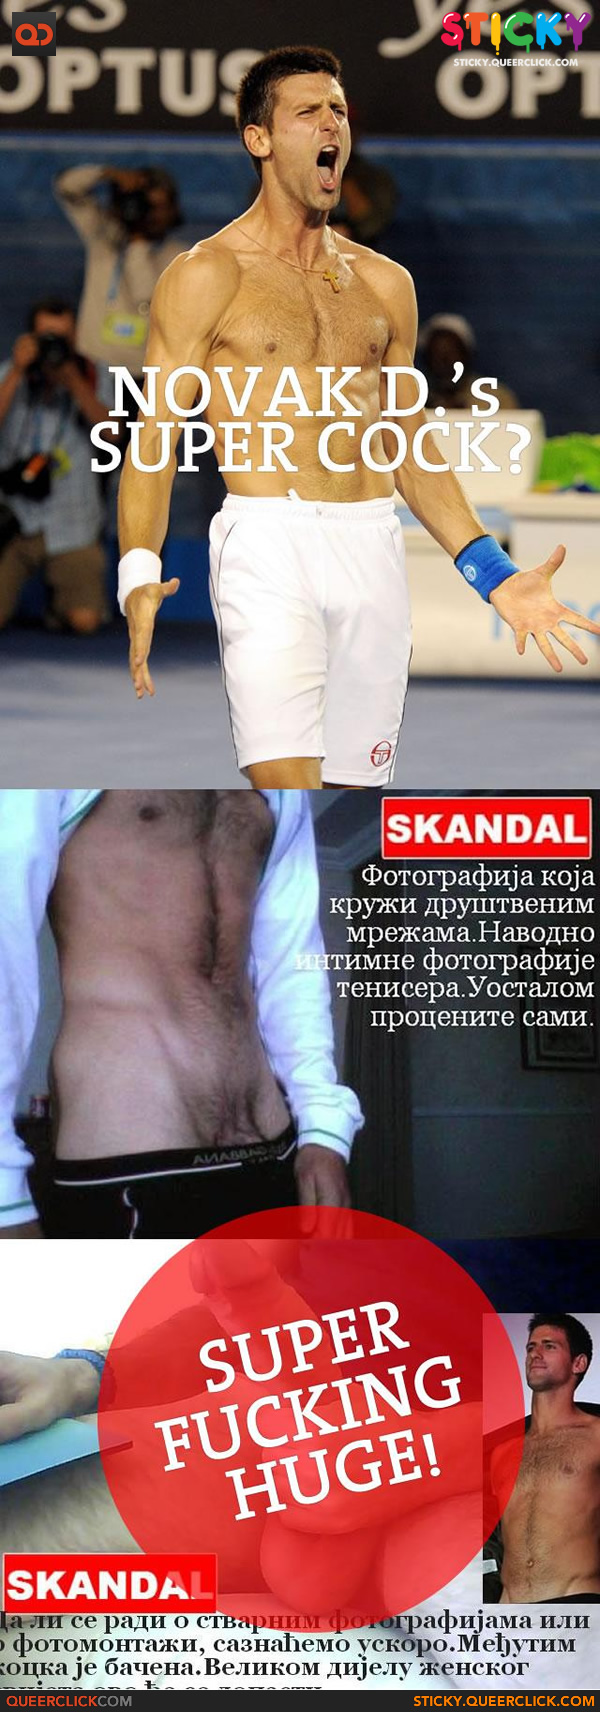 Novak Djokovic cock scandals